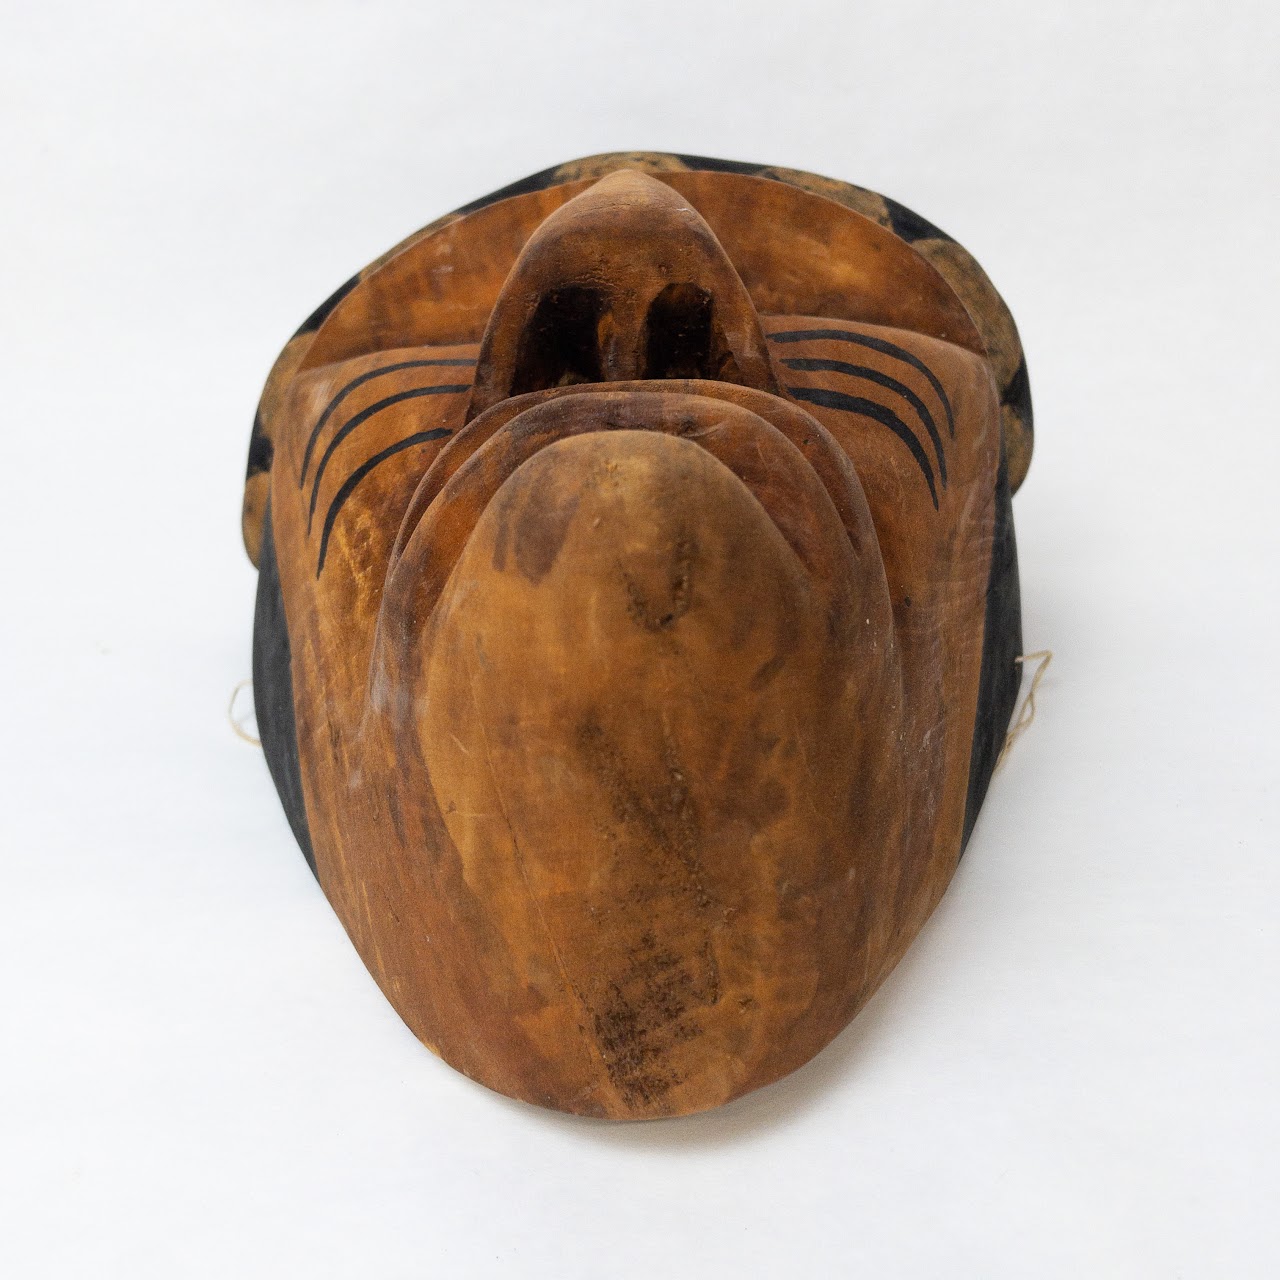 Anigiduwagi Carved Mask